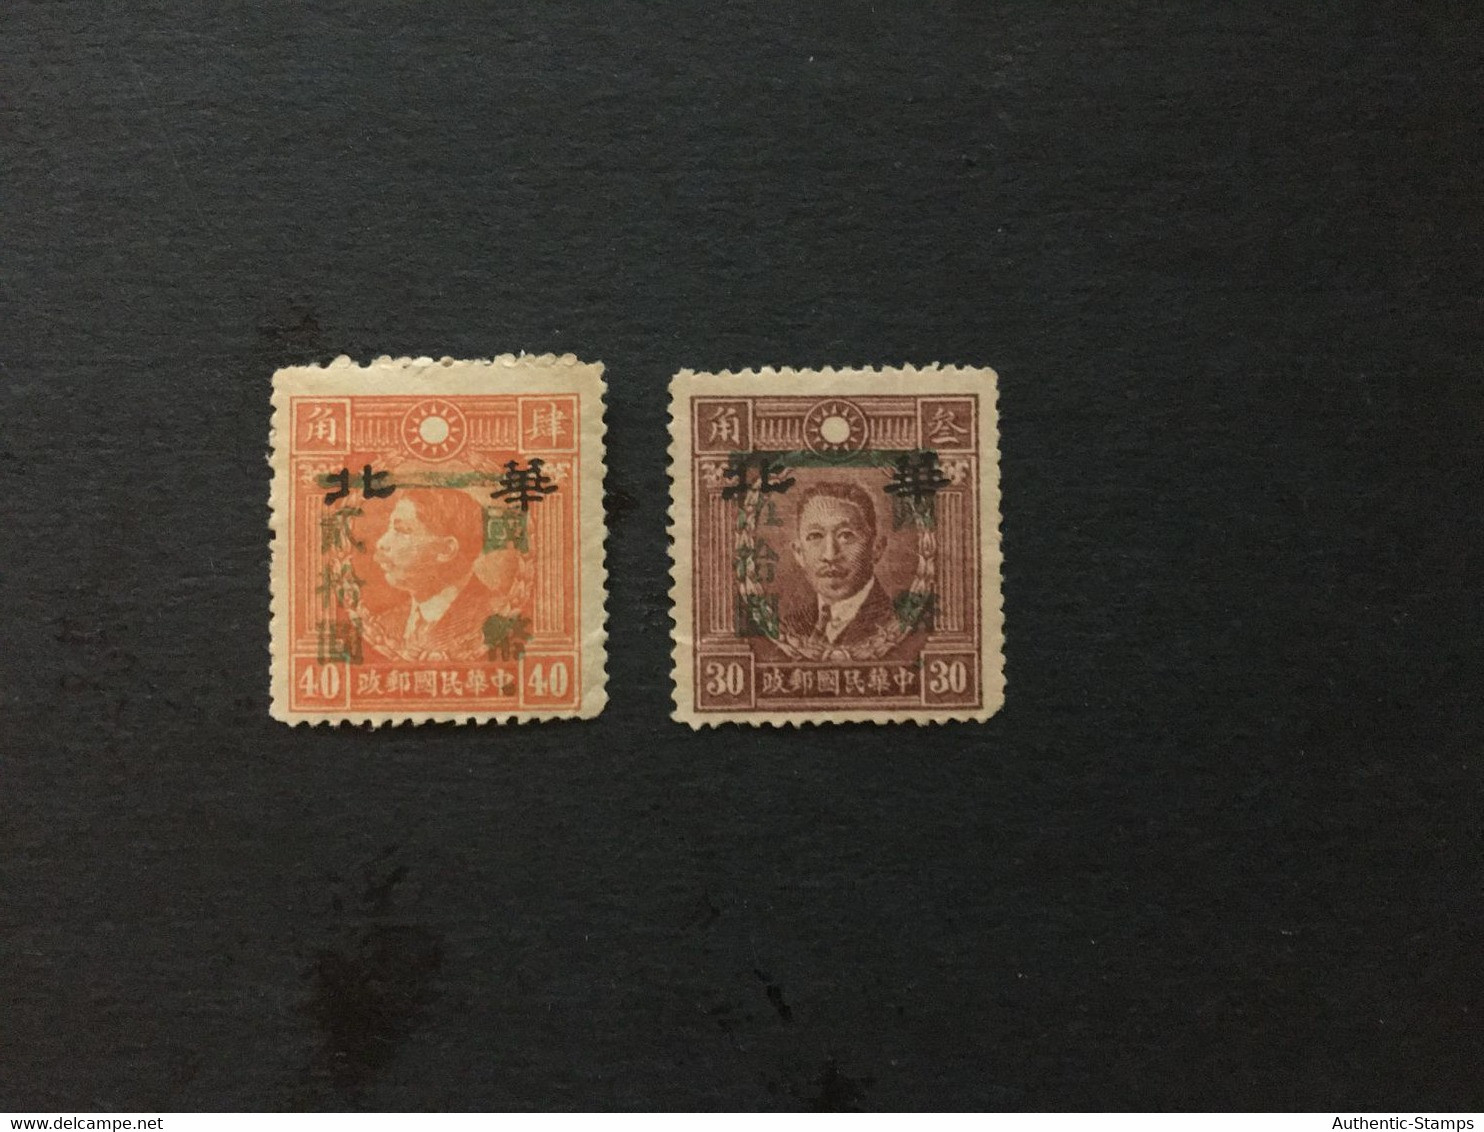 CHINA Local Stamp SET, Unused, RARE OVERPRINT, Japanese OCCUPATION, CINA, CHINE,  LIST 263 - 1941-45 Noord-China